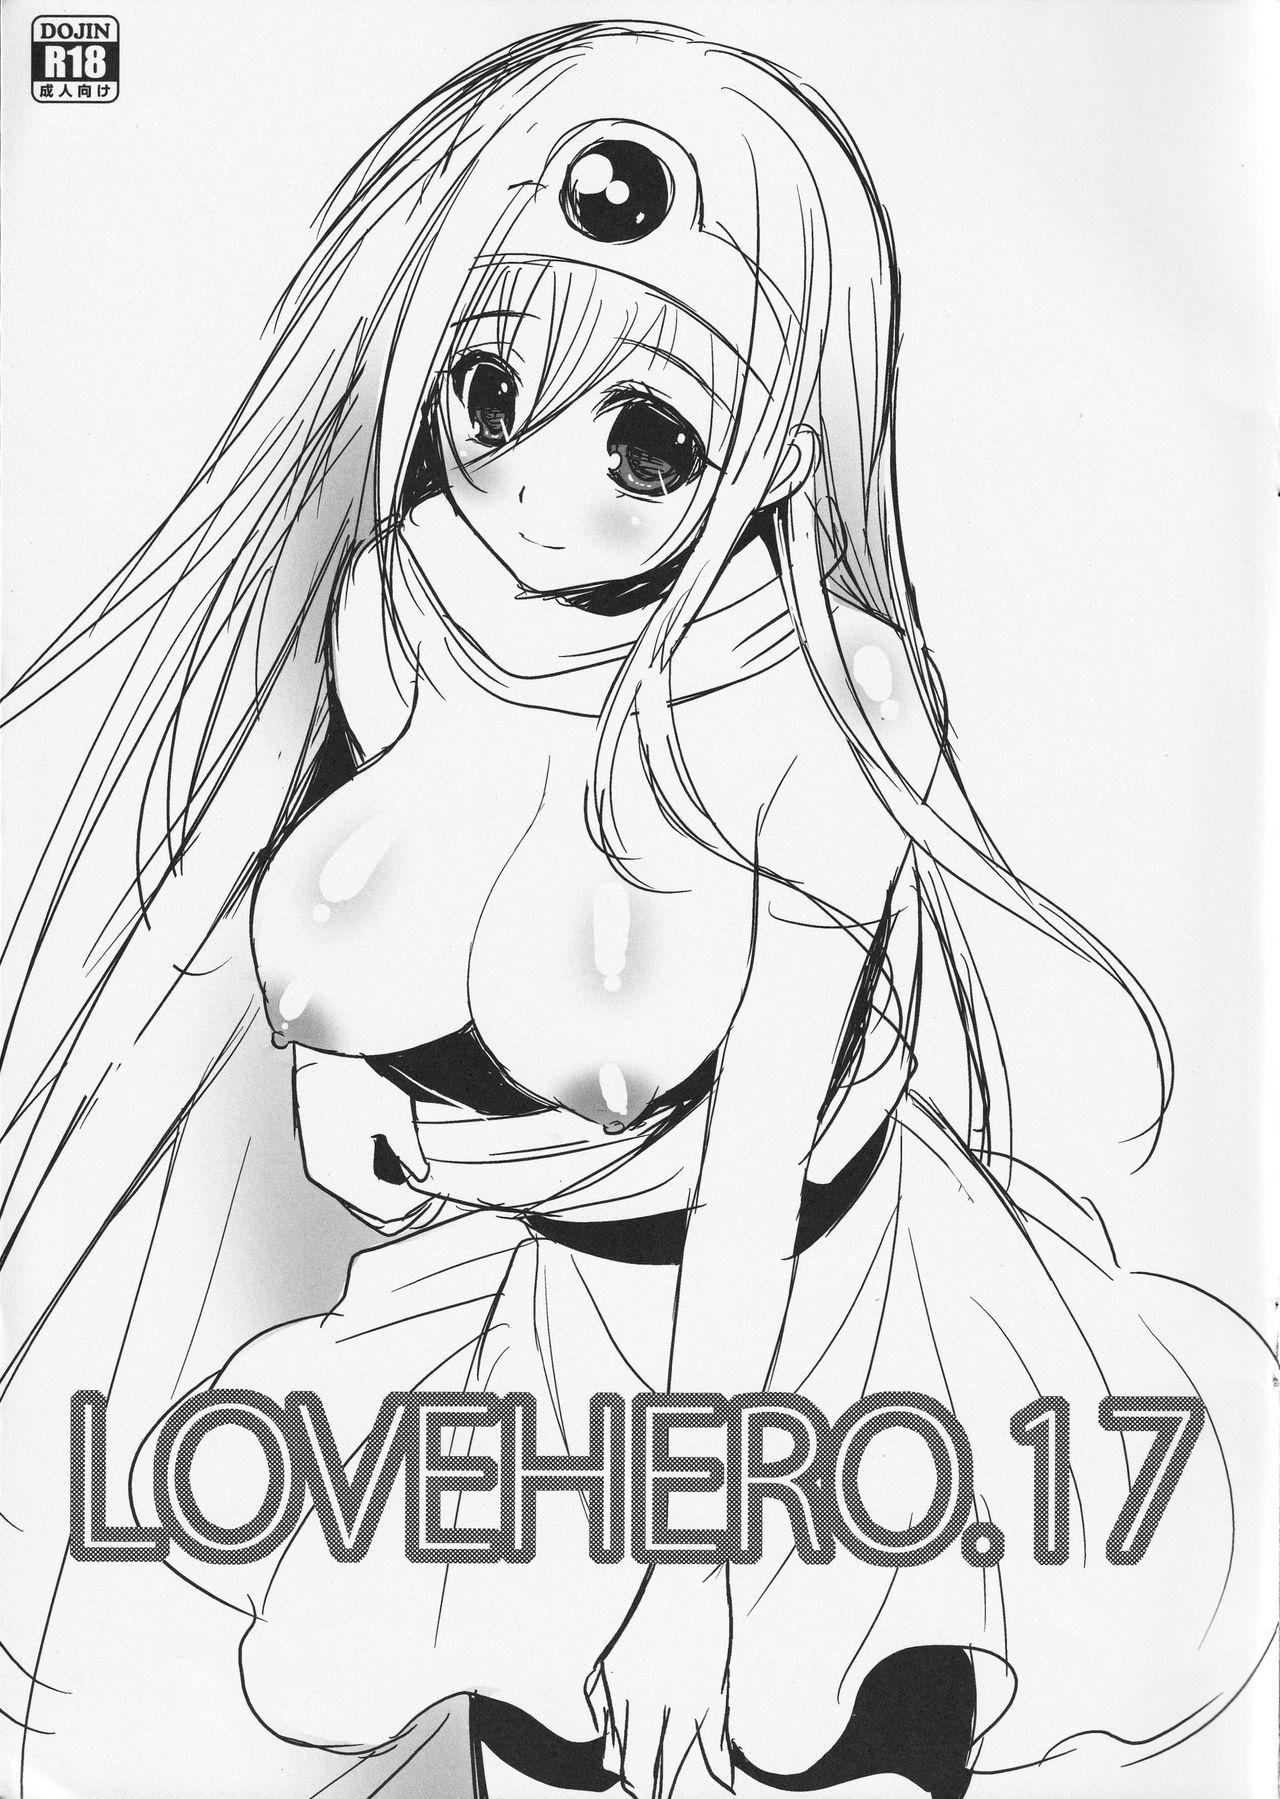 LOVEHERO.17 1